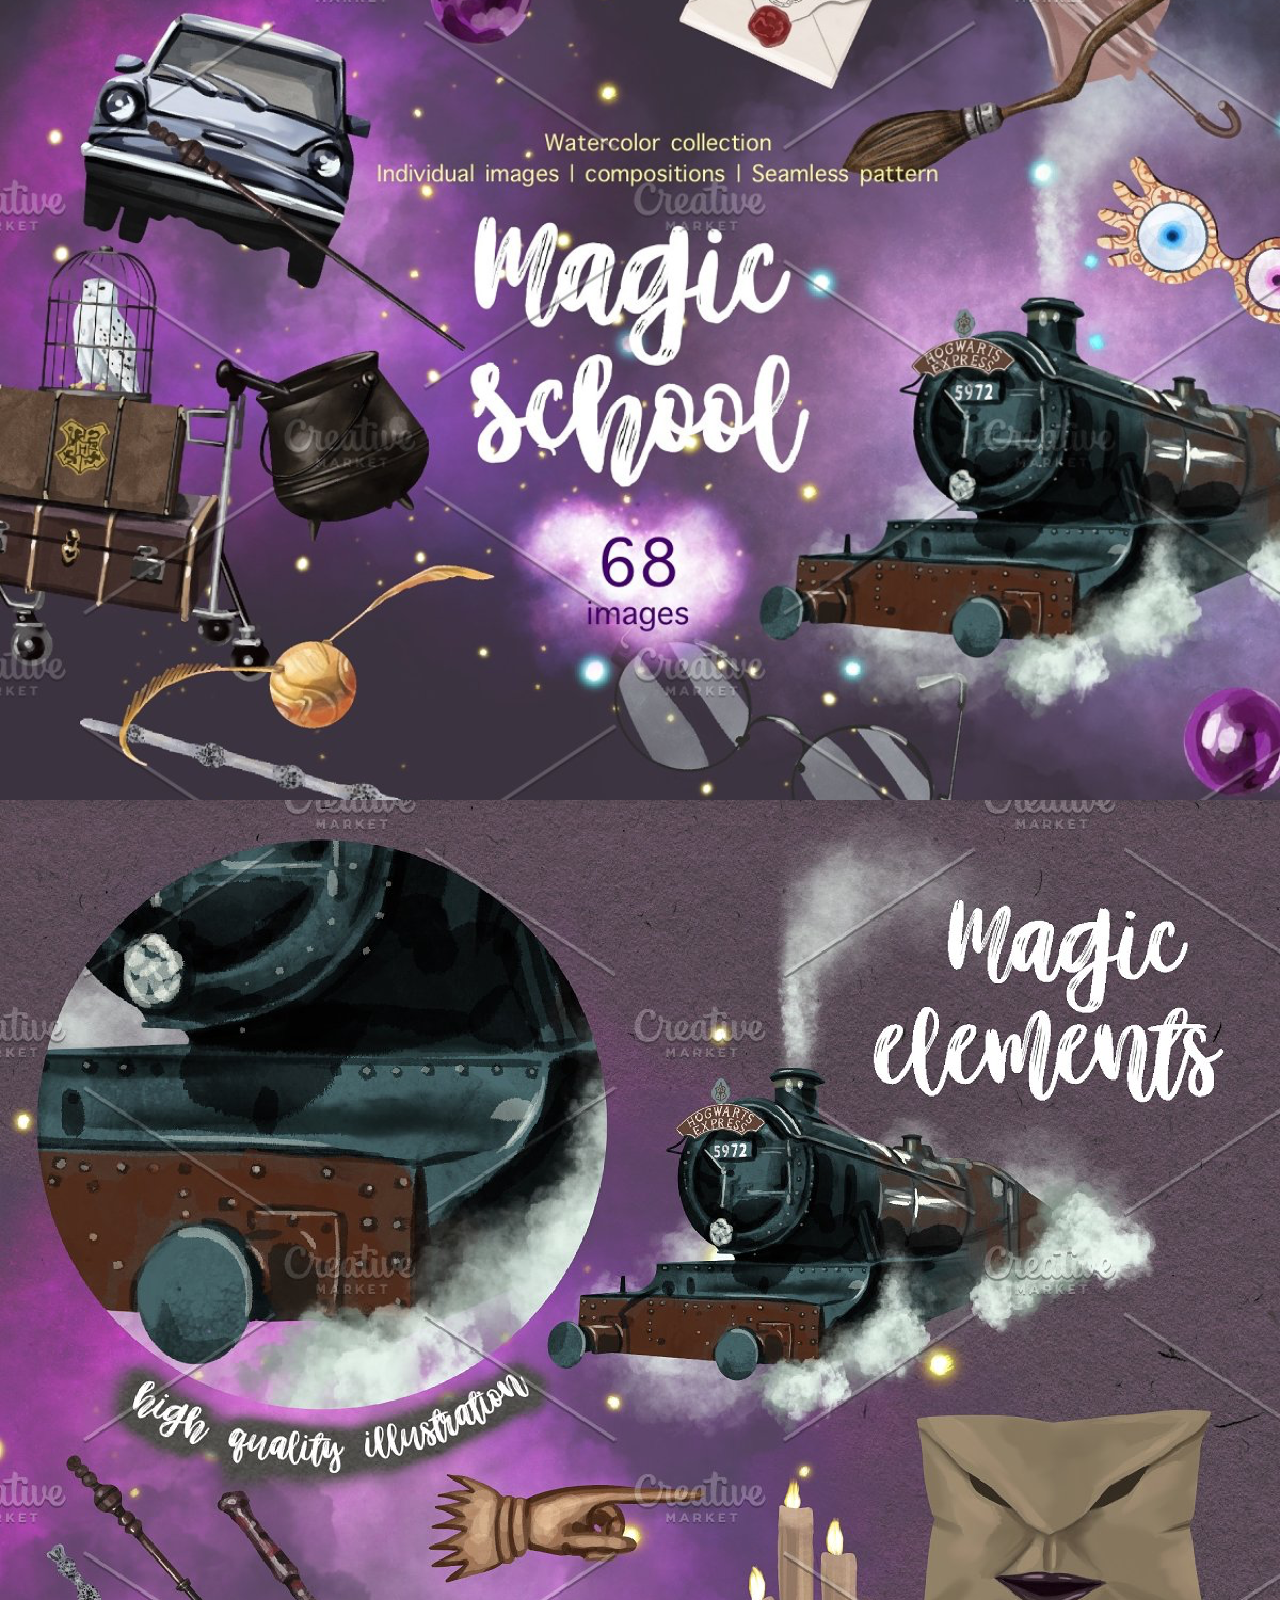 Watercolor magic school pinterest image preview.